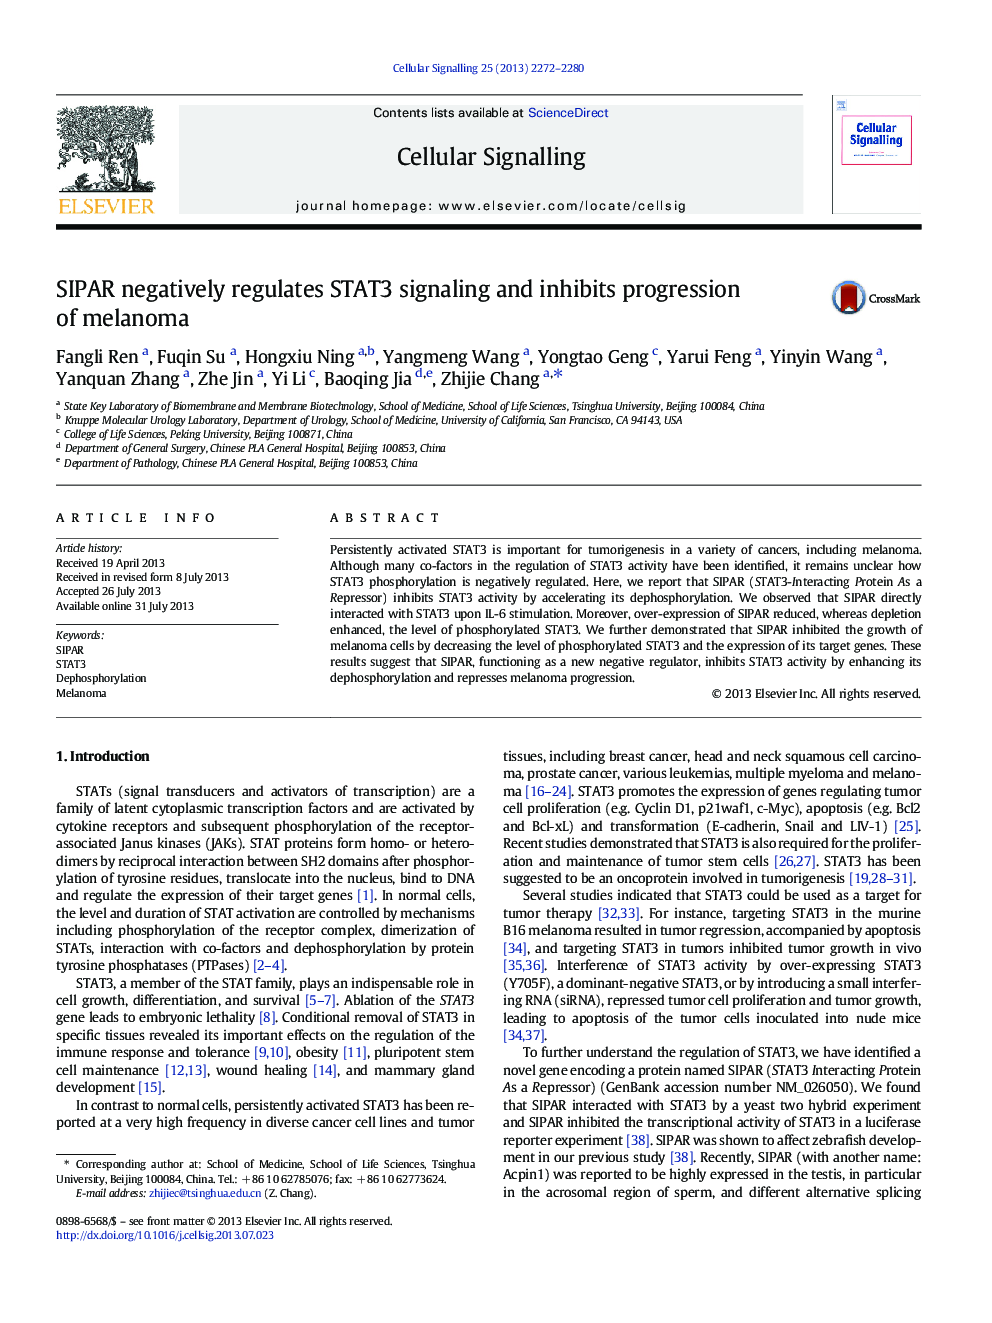 SIPAR negatively regulates STAT3 signaling and inhibits progression of melanoma